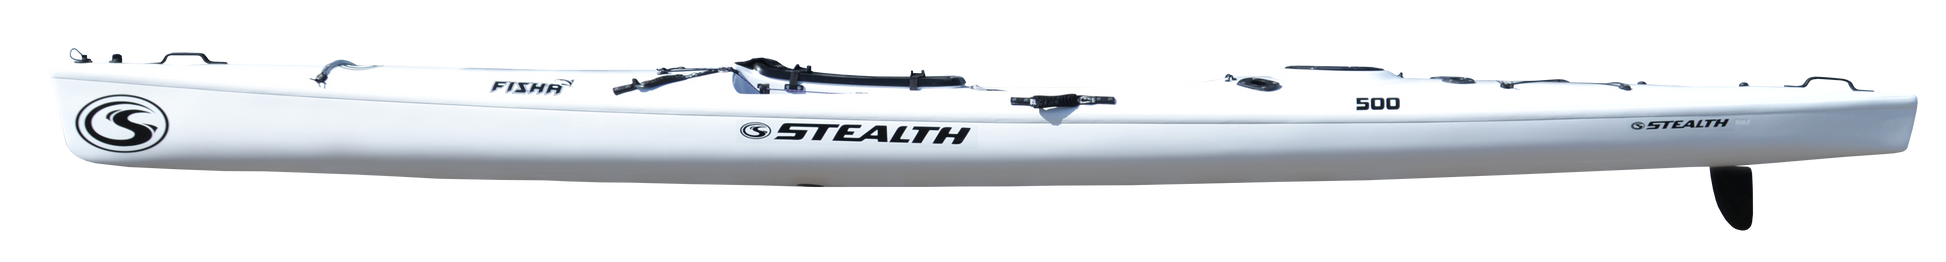 Stealth Fisha 500 Kayak - Wild Coast Kayaks